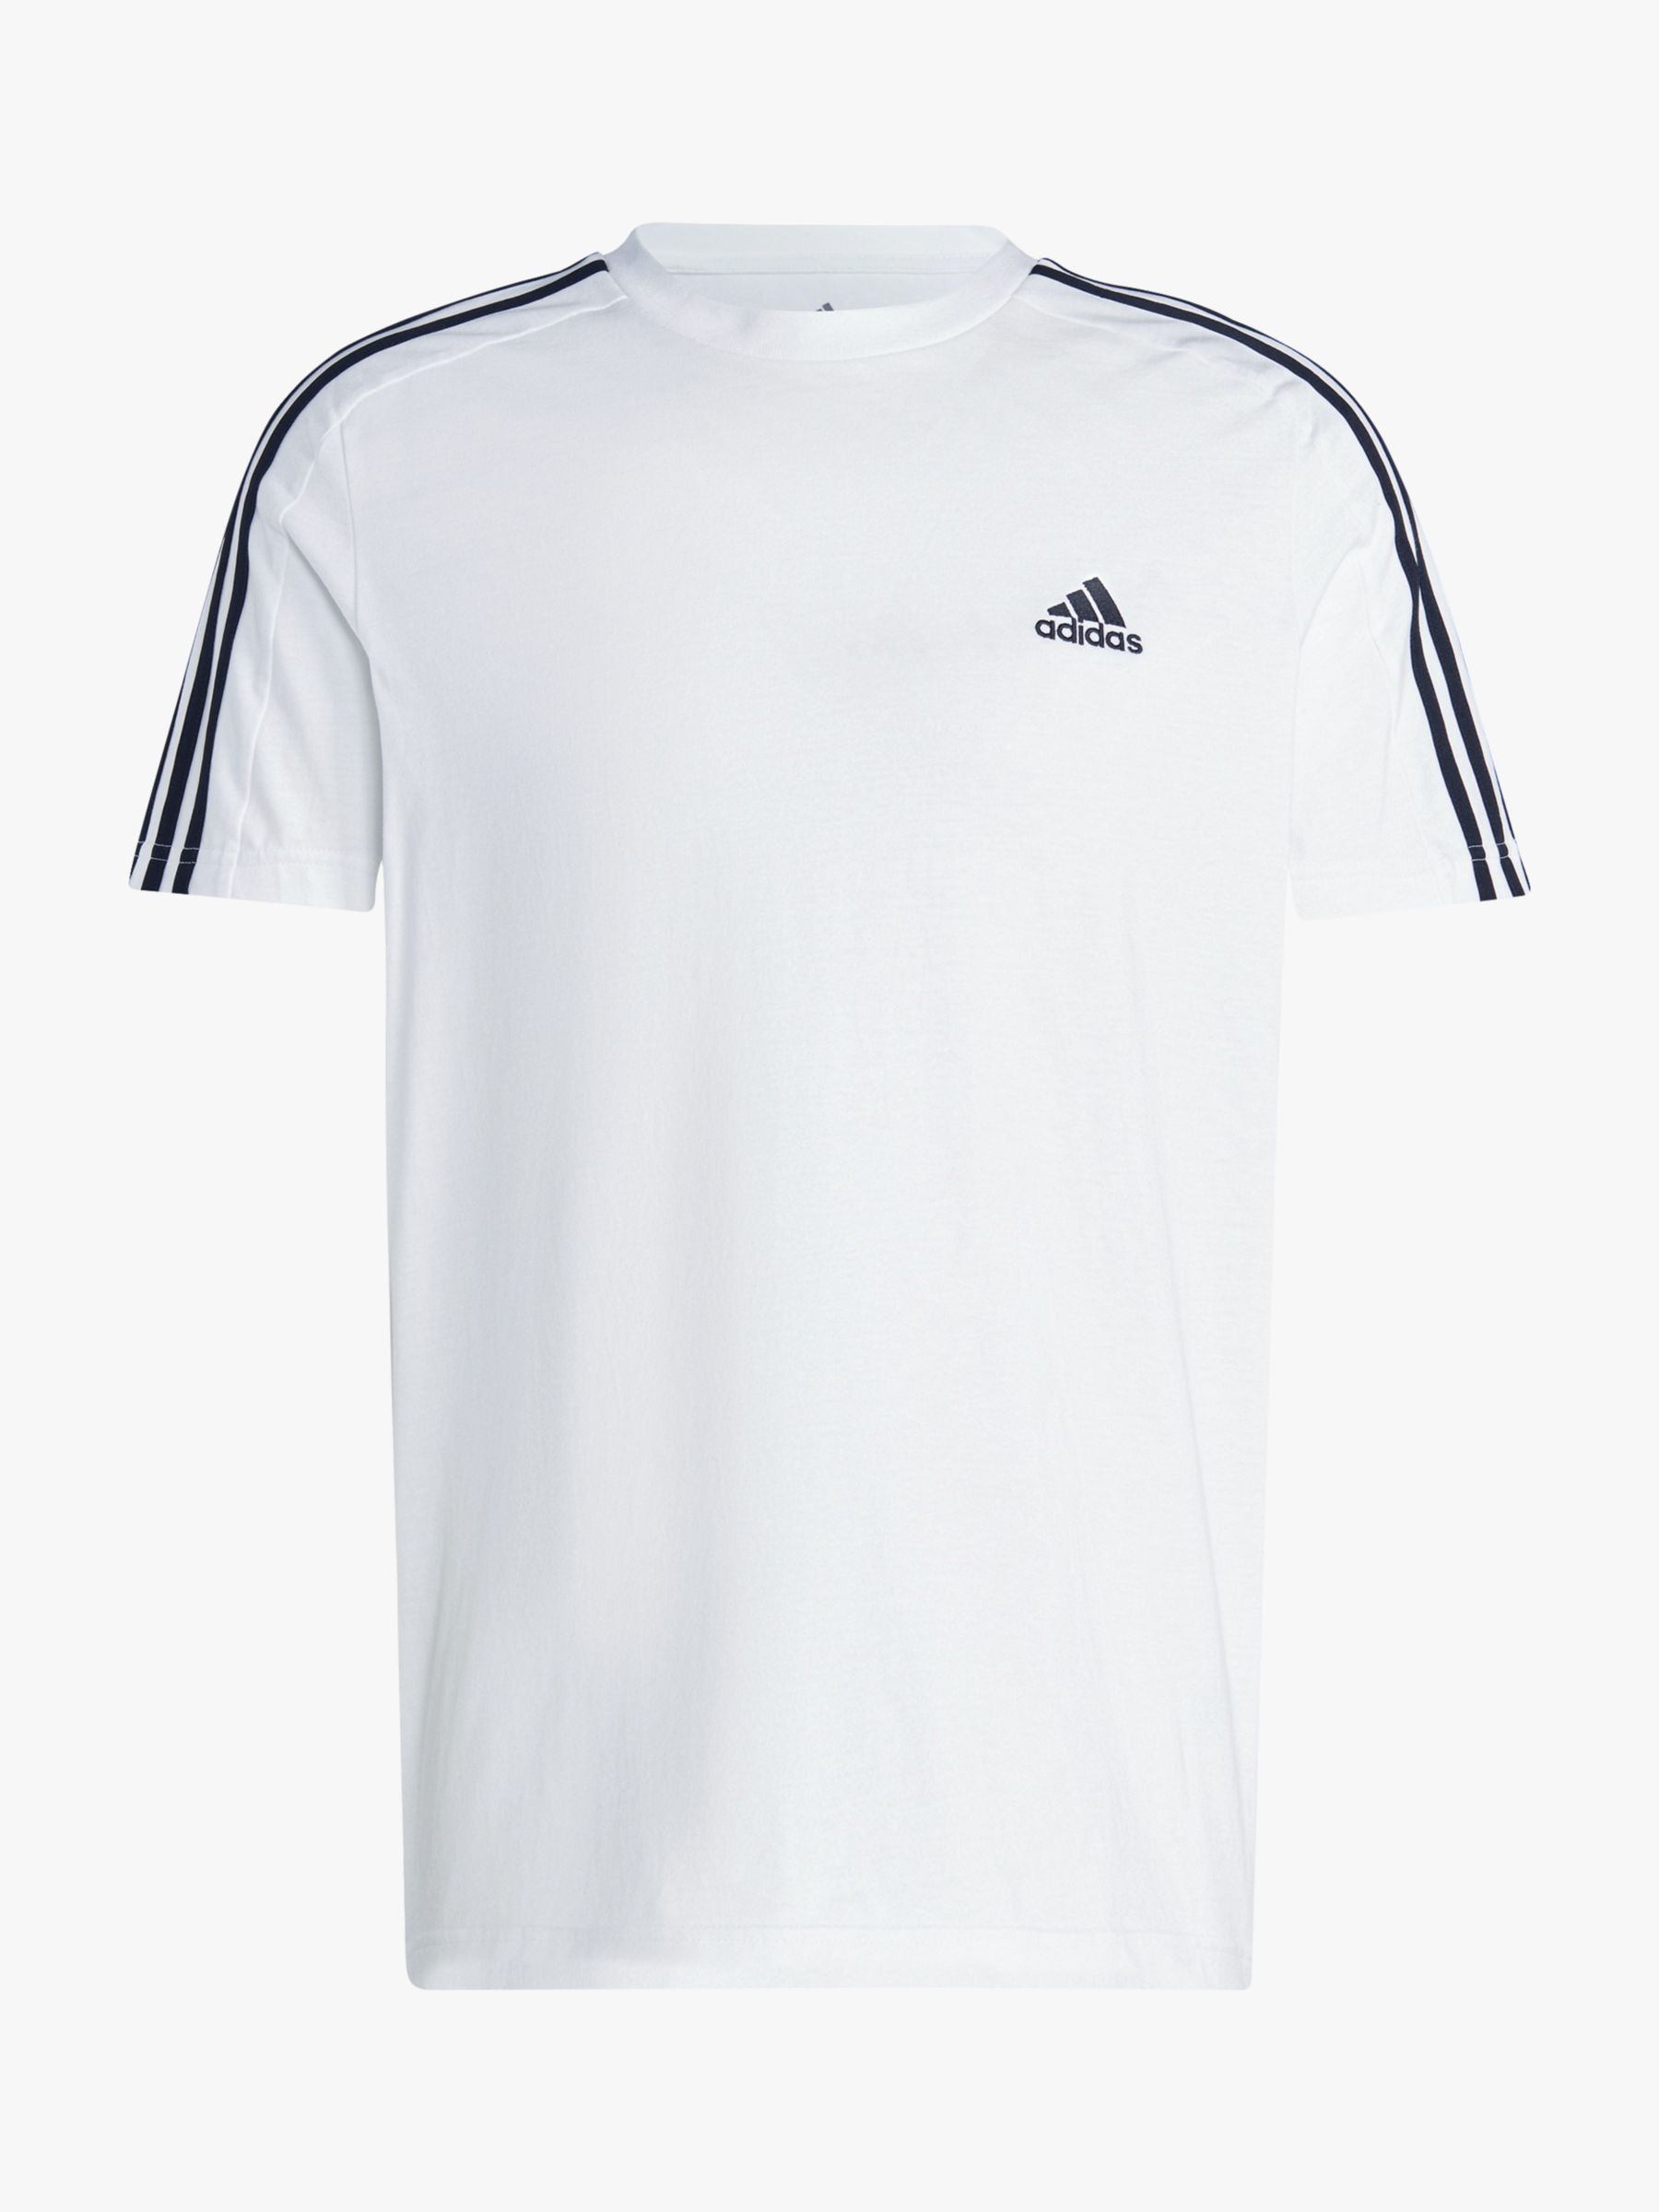 adidas Essentials 3-Stripes T-Shirt, White/Black at John Lewis & Partners